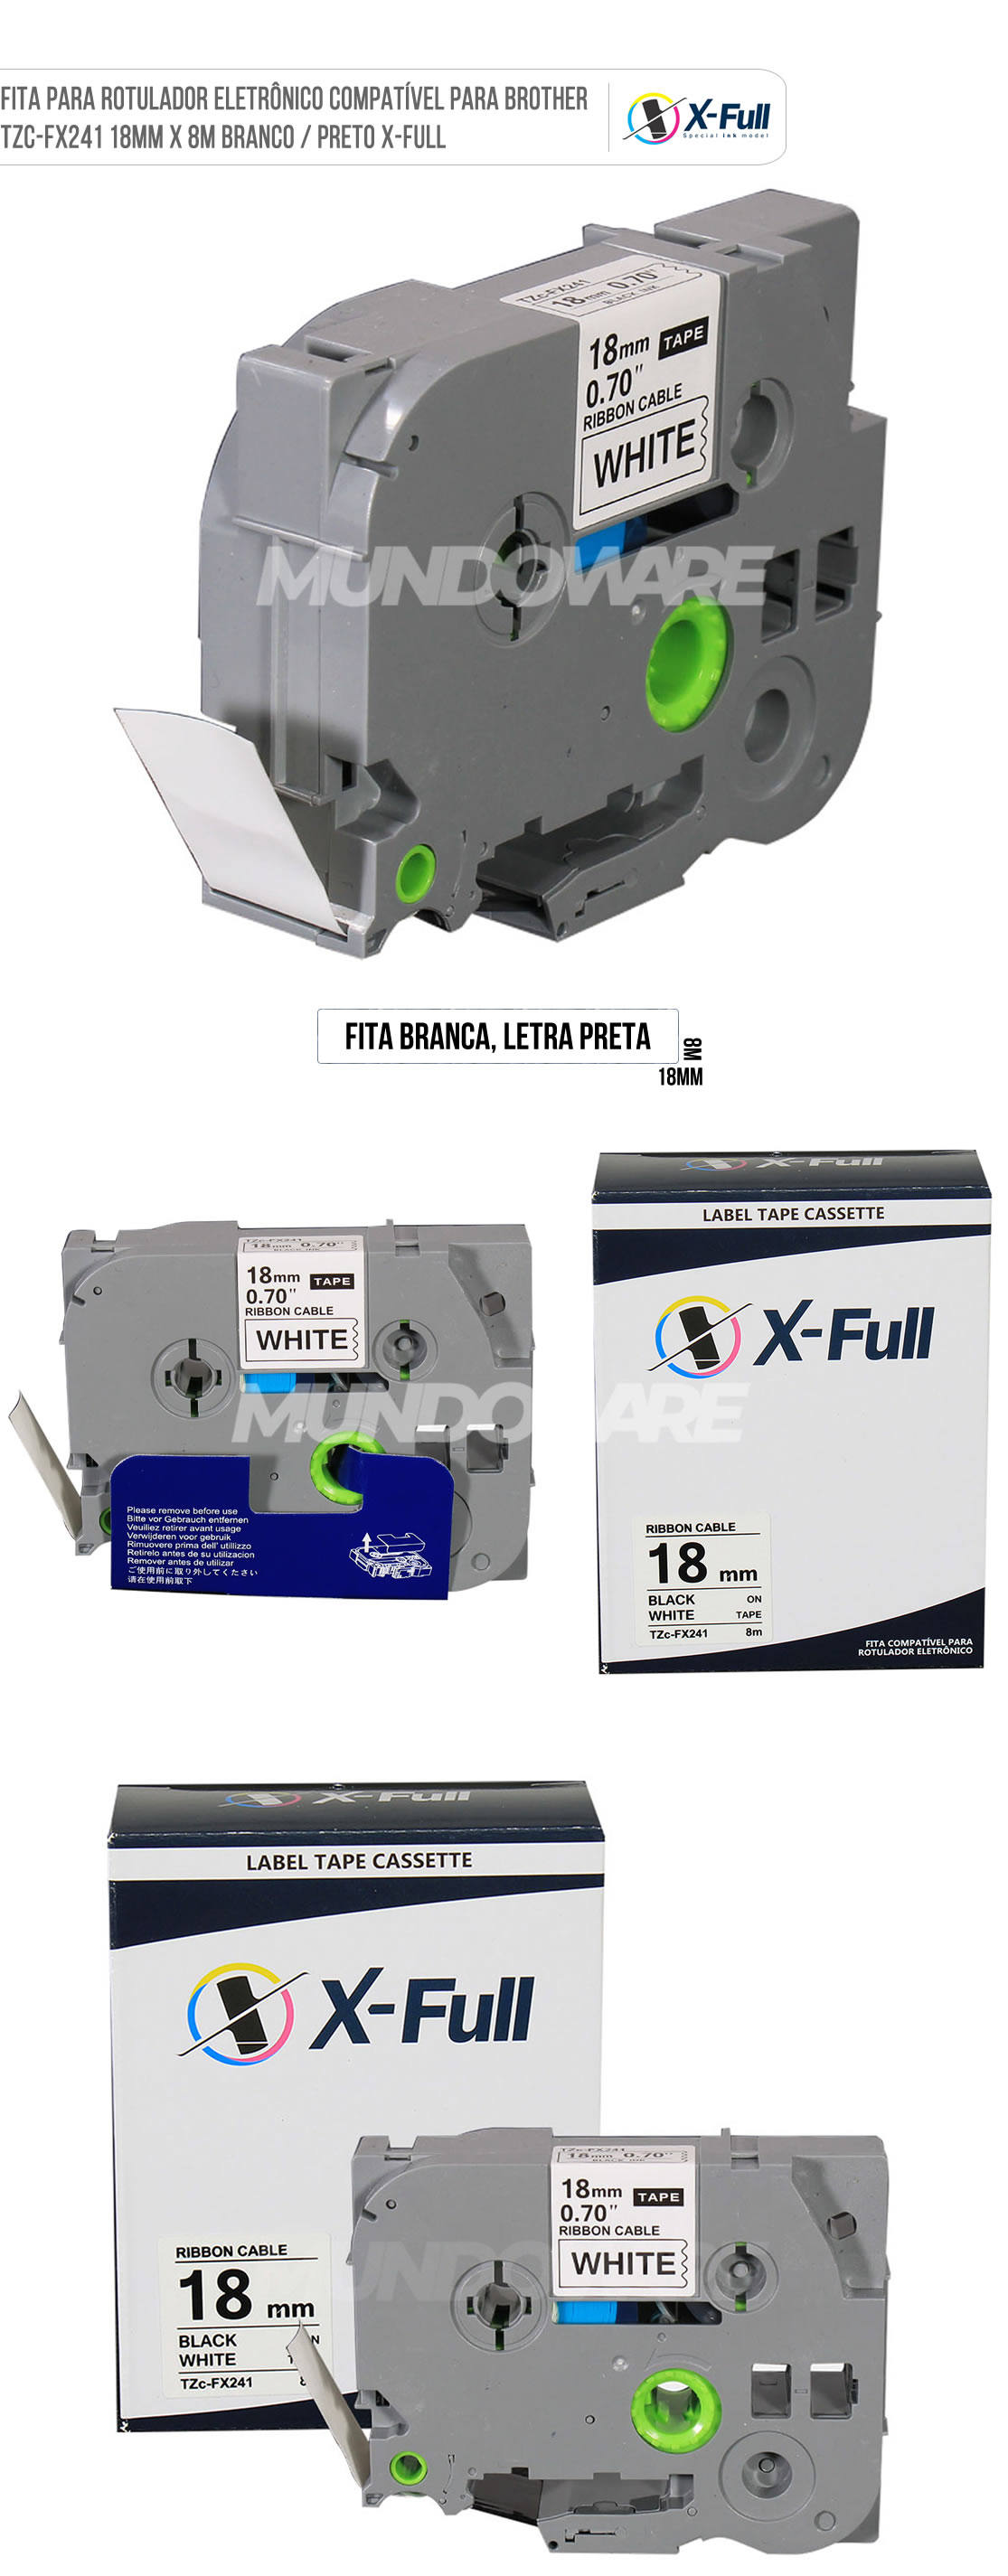 Fita Rotuladora Compatível para Rotulador Eletrônico Brother TZc-FX241 18mm x 8m Preto sobre Branco X-Full